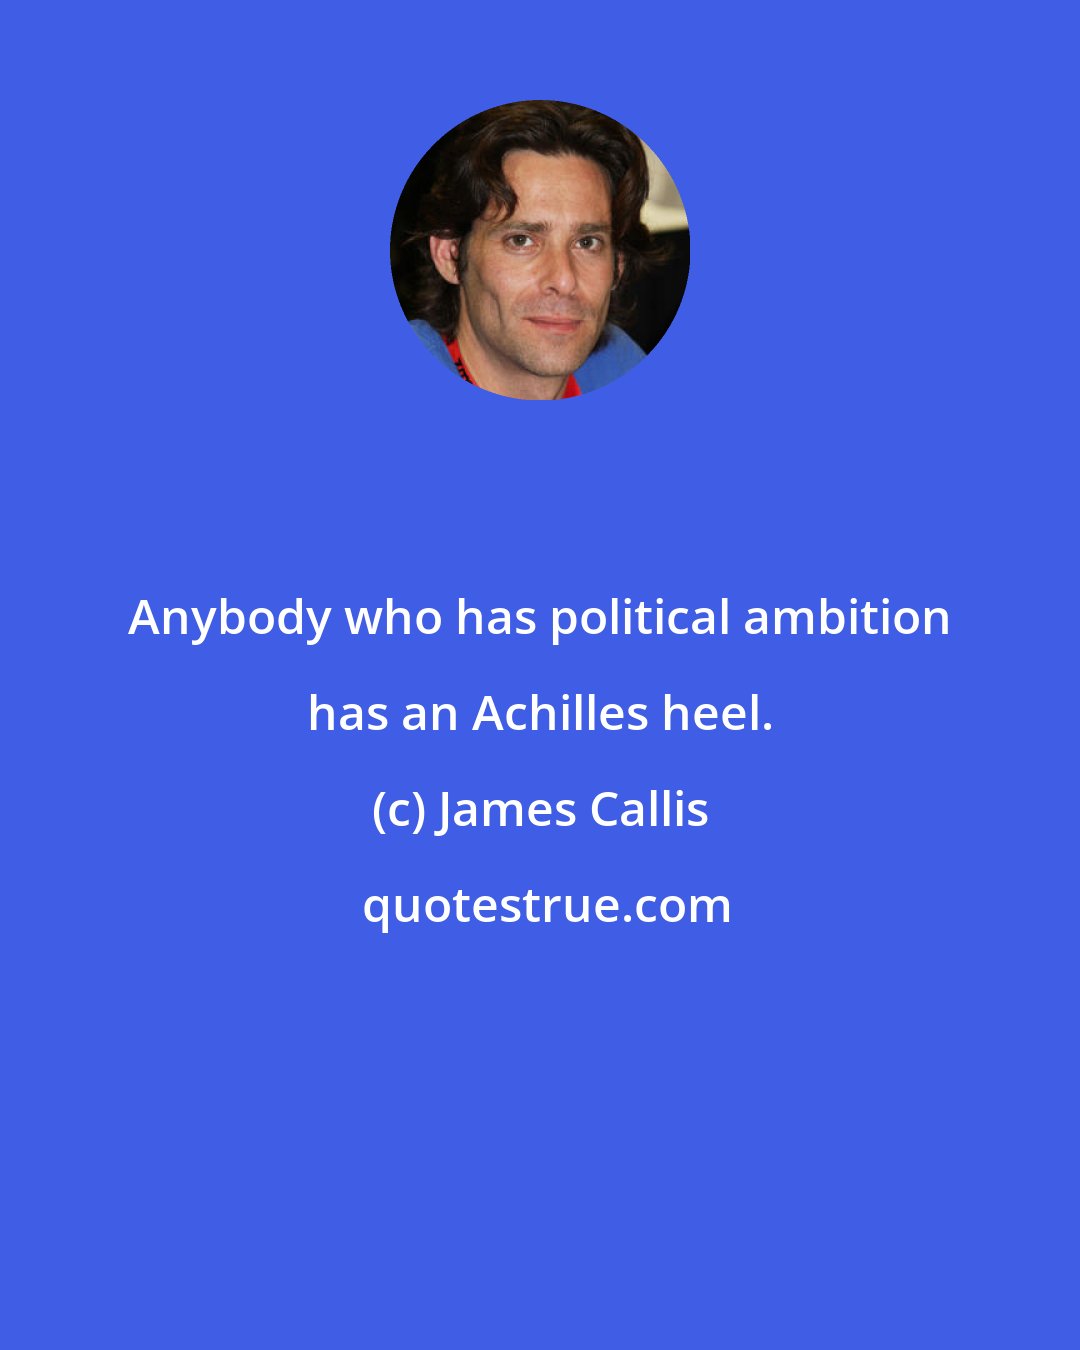 James Callis: Anybody who has political ambition has an Achilles heel.